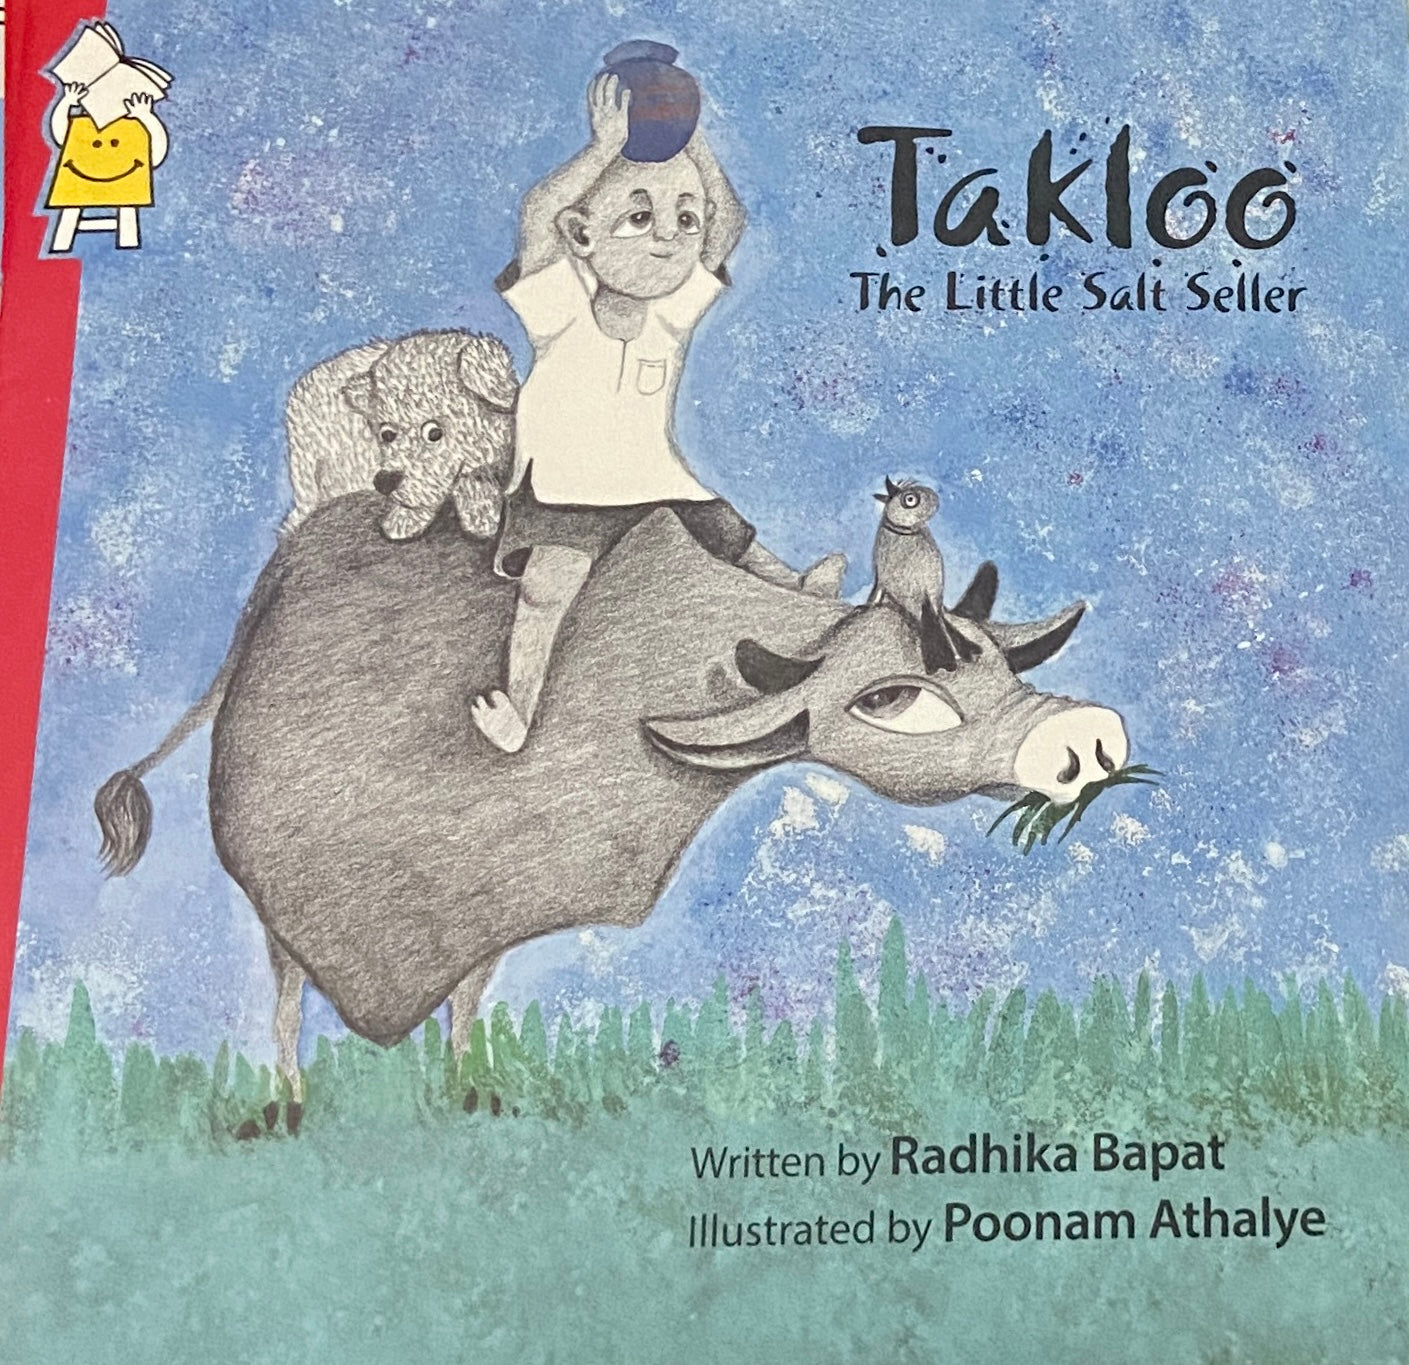 Takloo The Little Salt Seller by Radhika Bapat